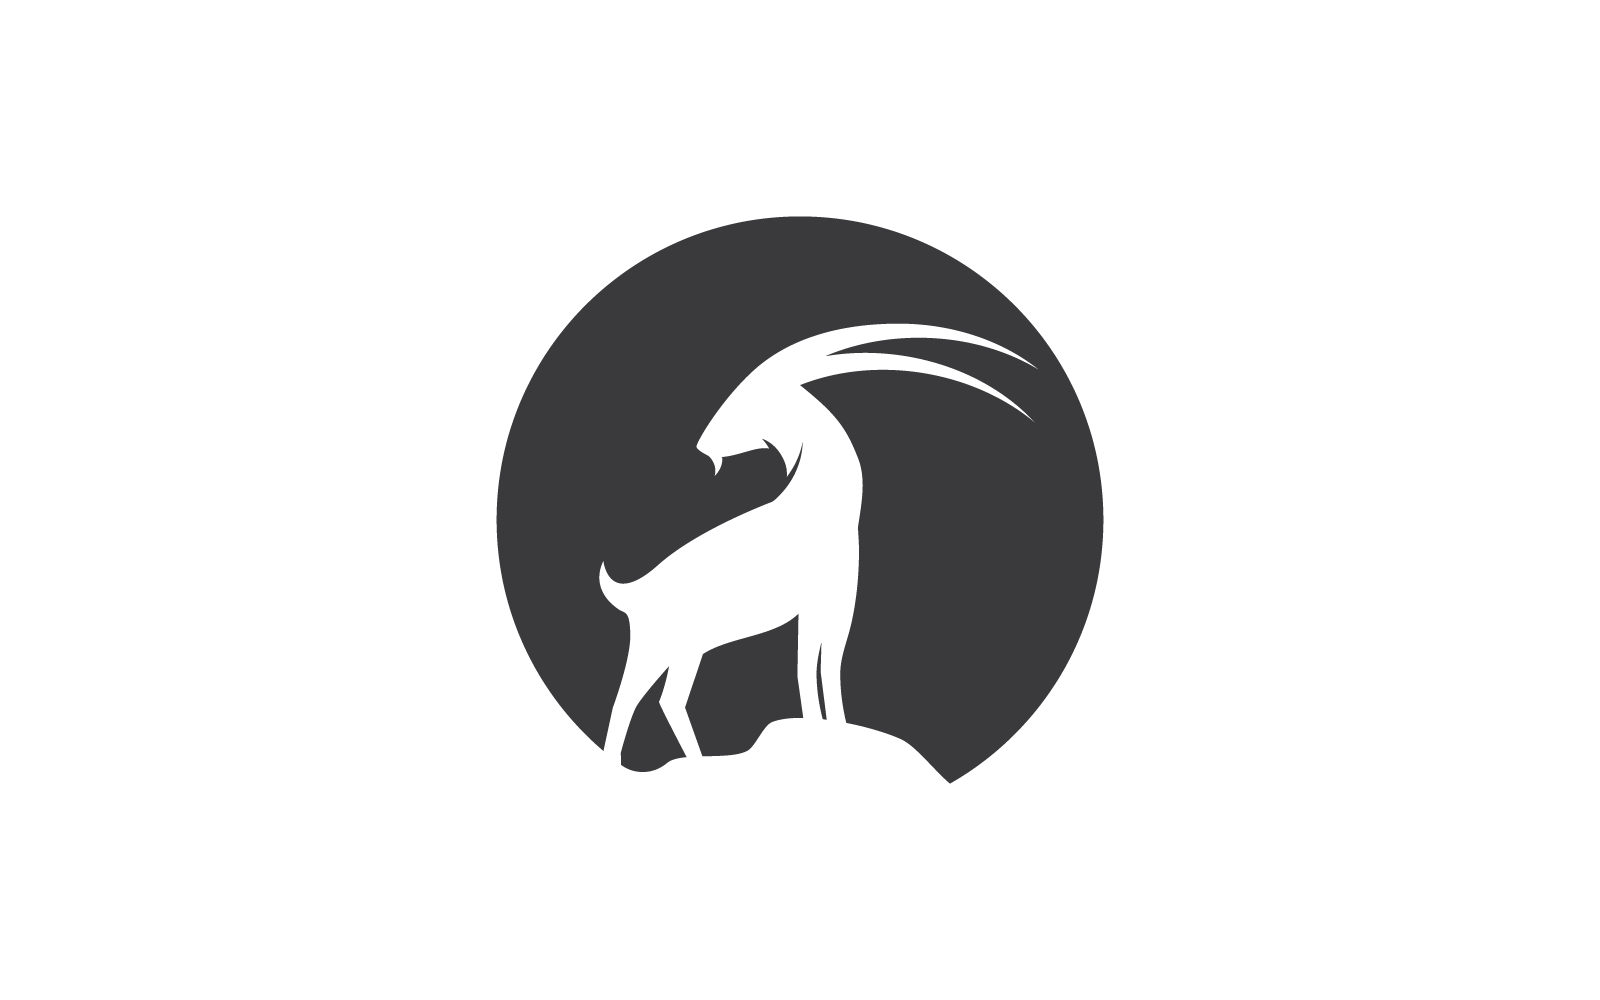 Kozy a ovce ilustrace šablony vektorový design